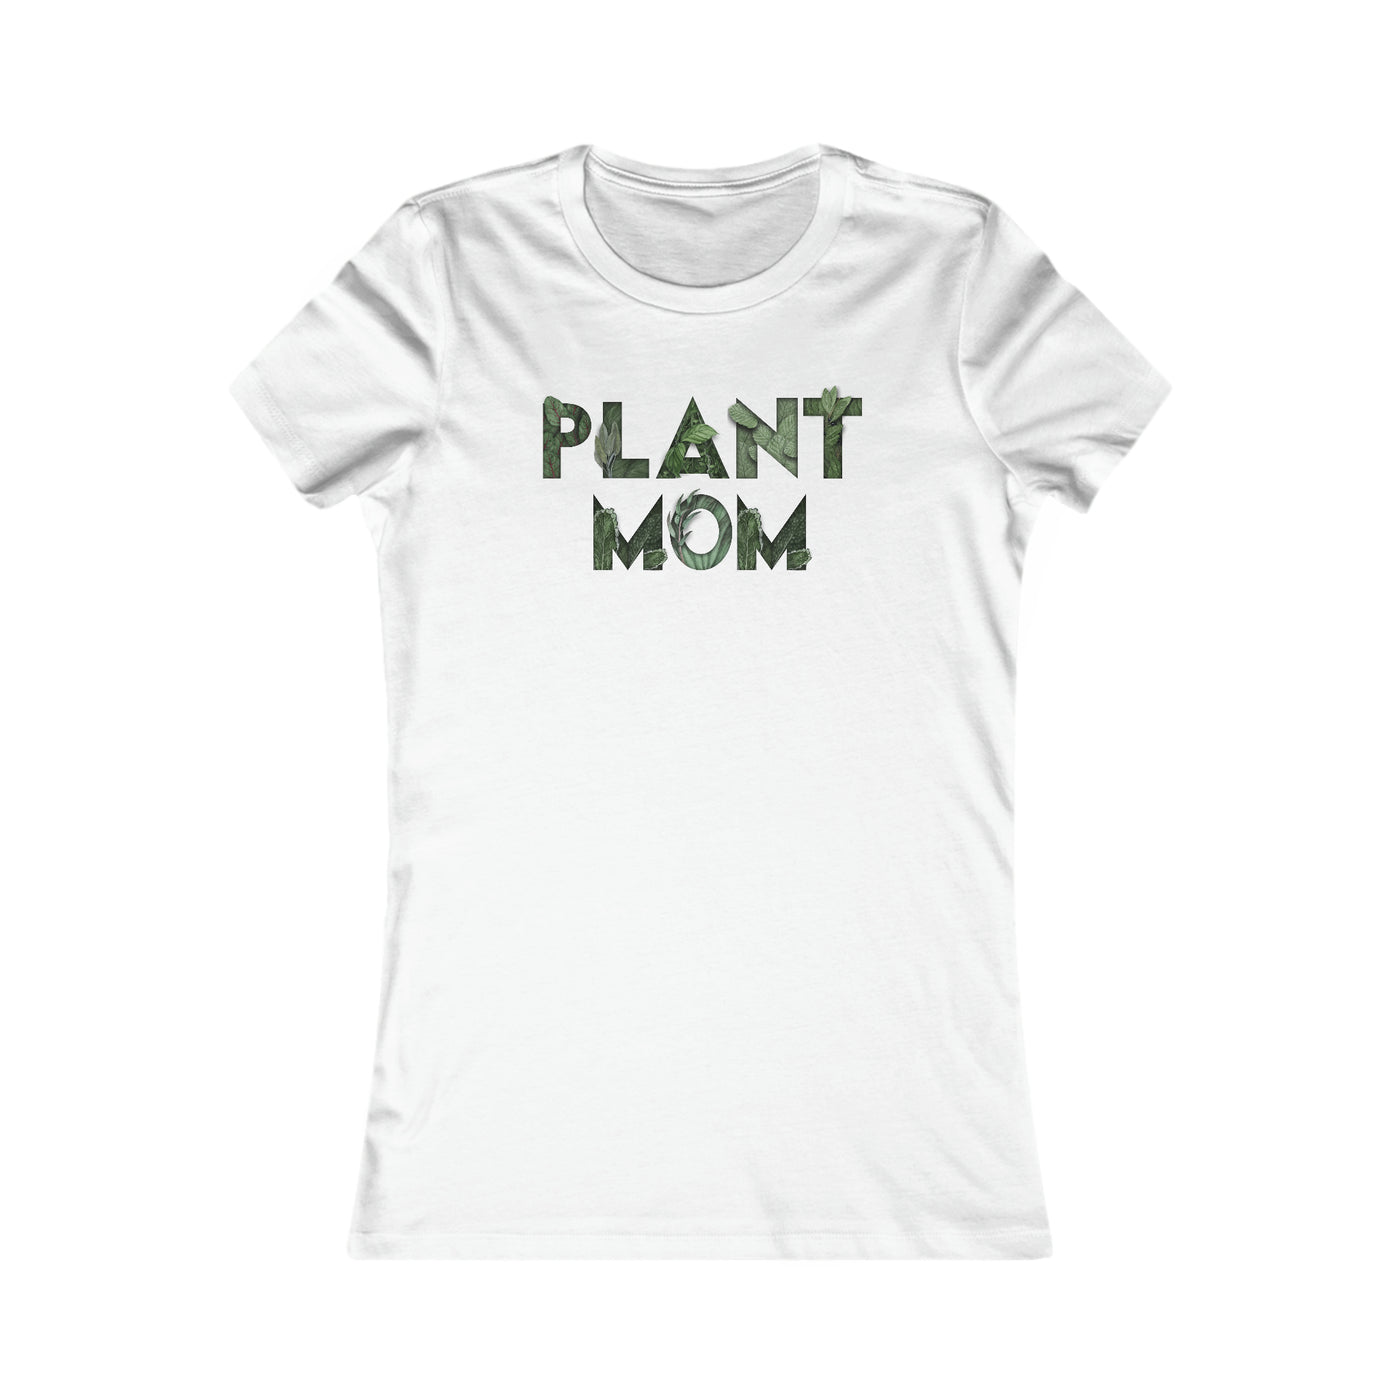 Plant Mom Women's Favorite Tee